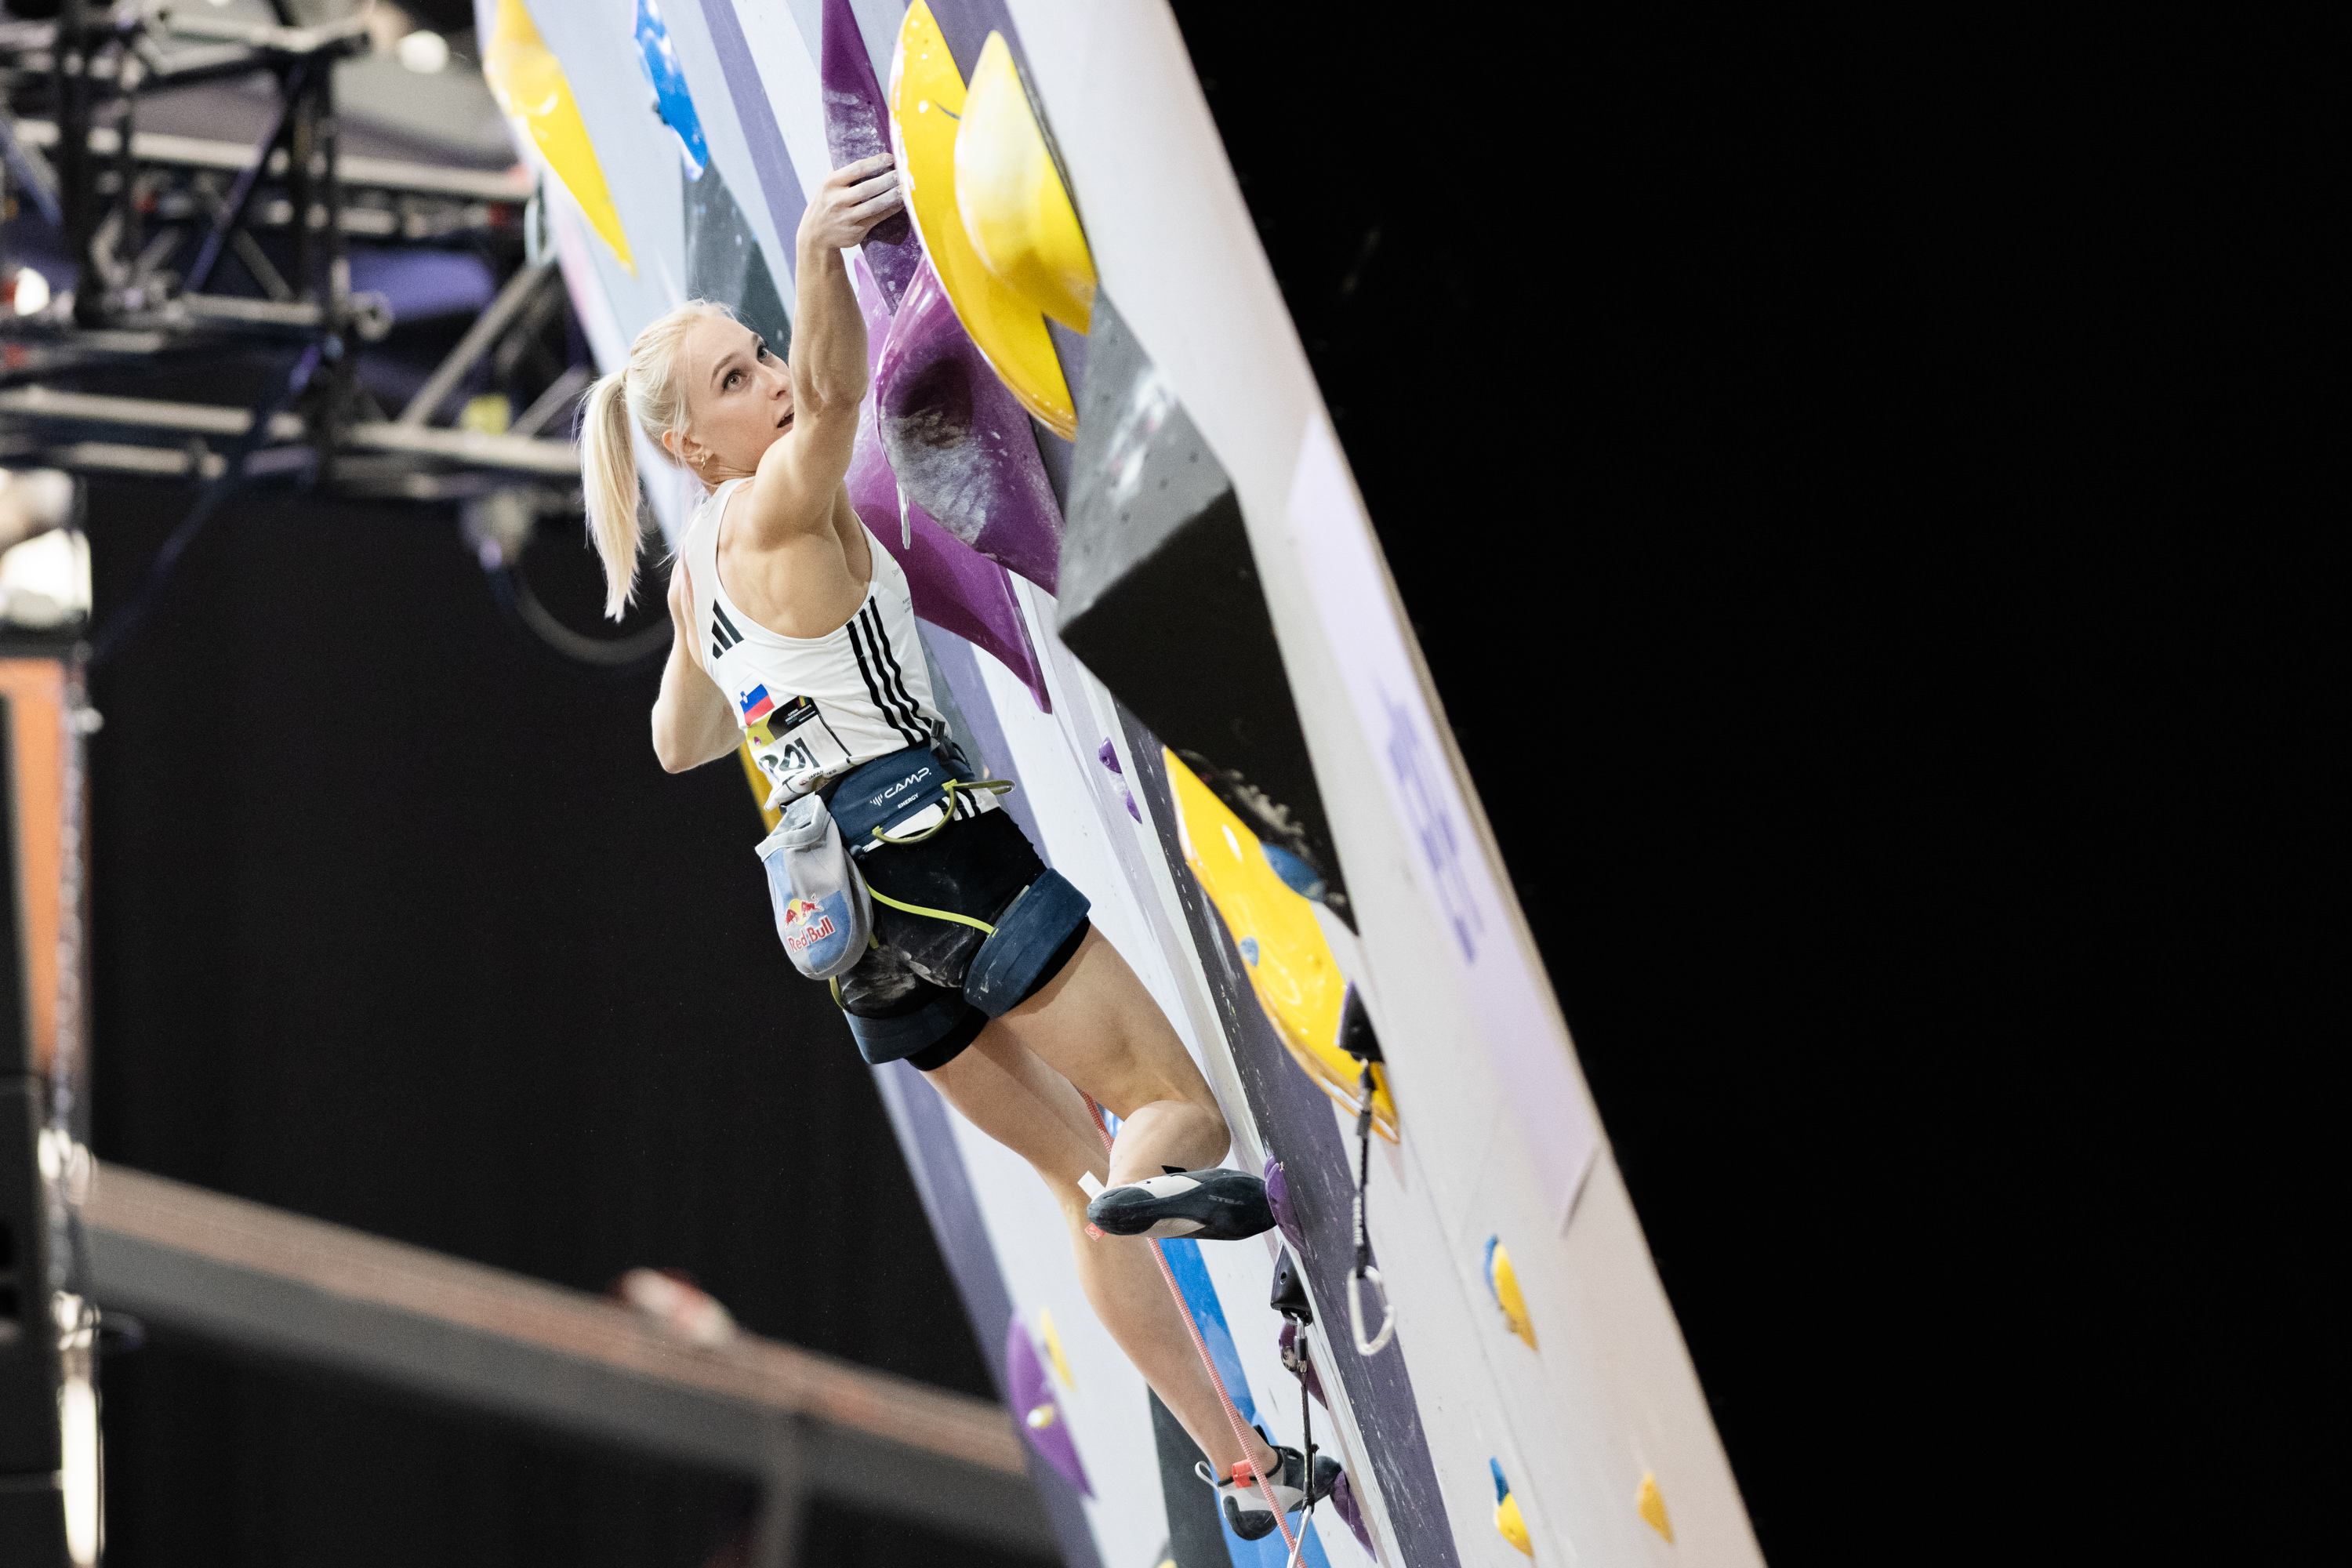 Lead climbers shine as women progress in Bern World Championships